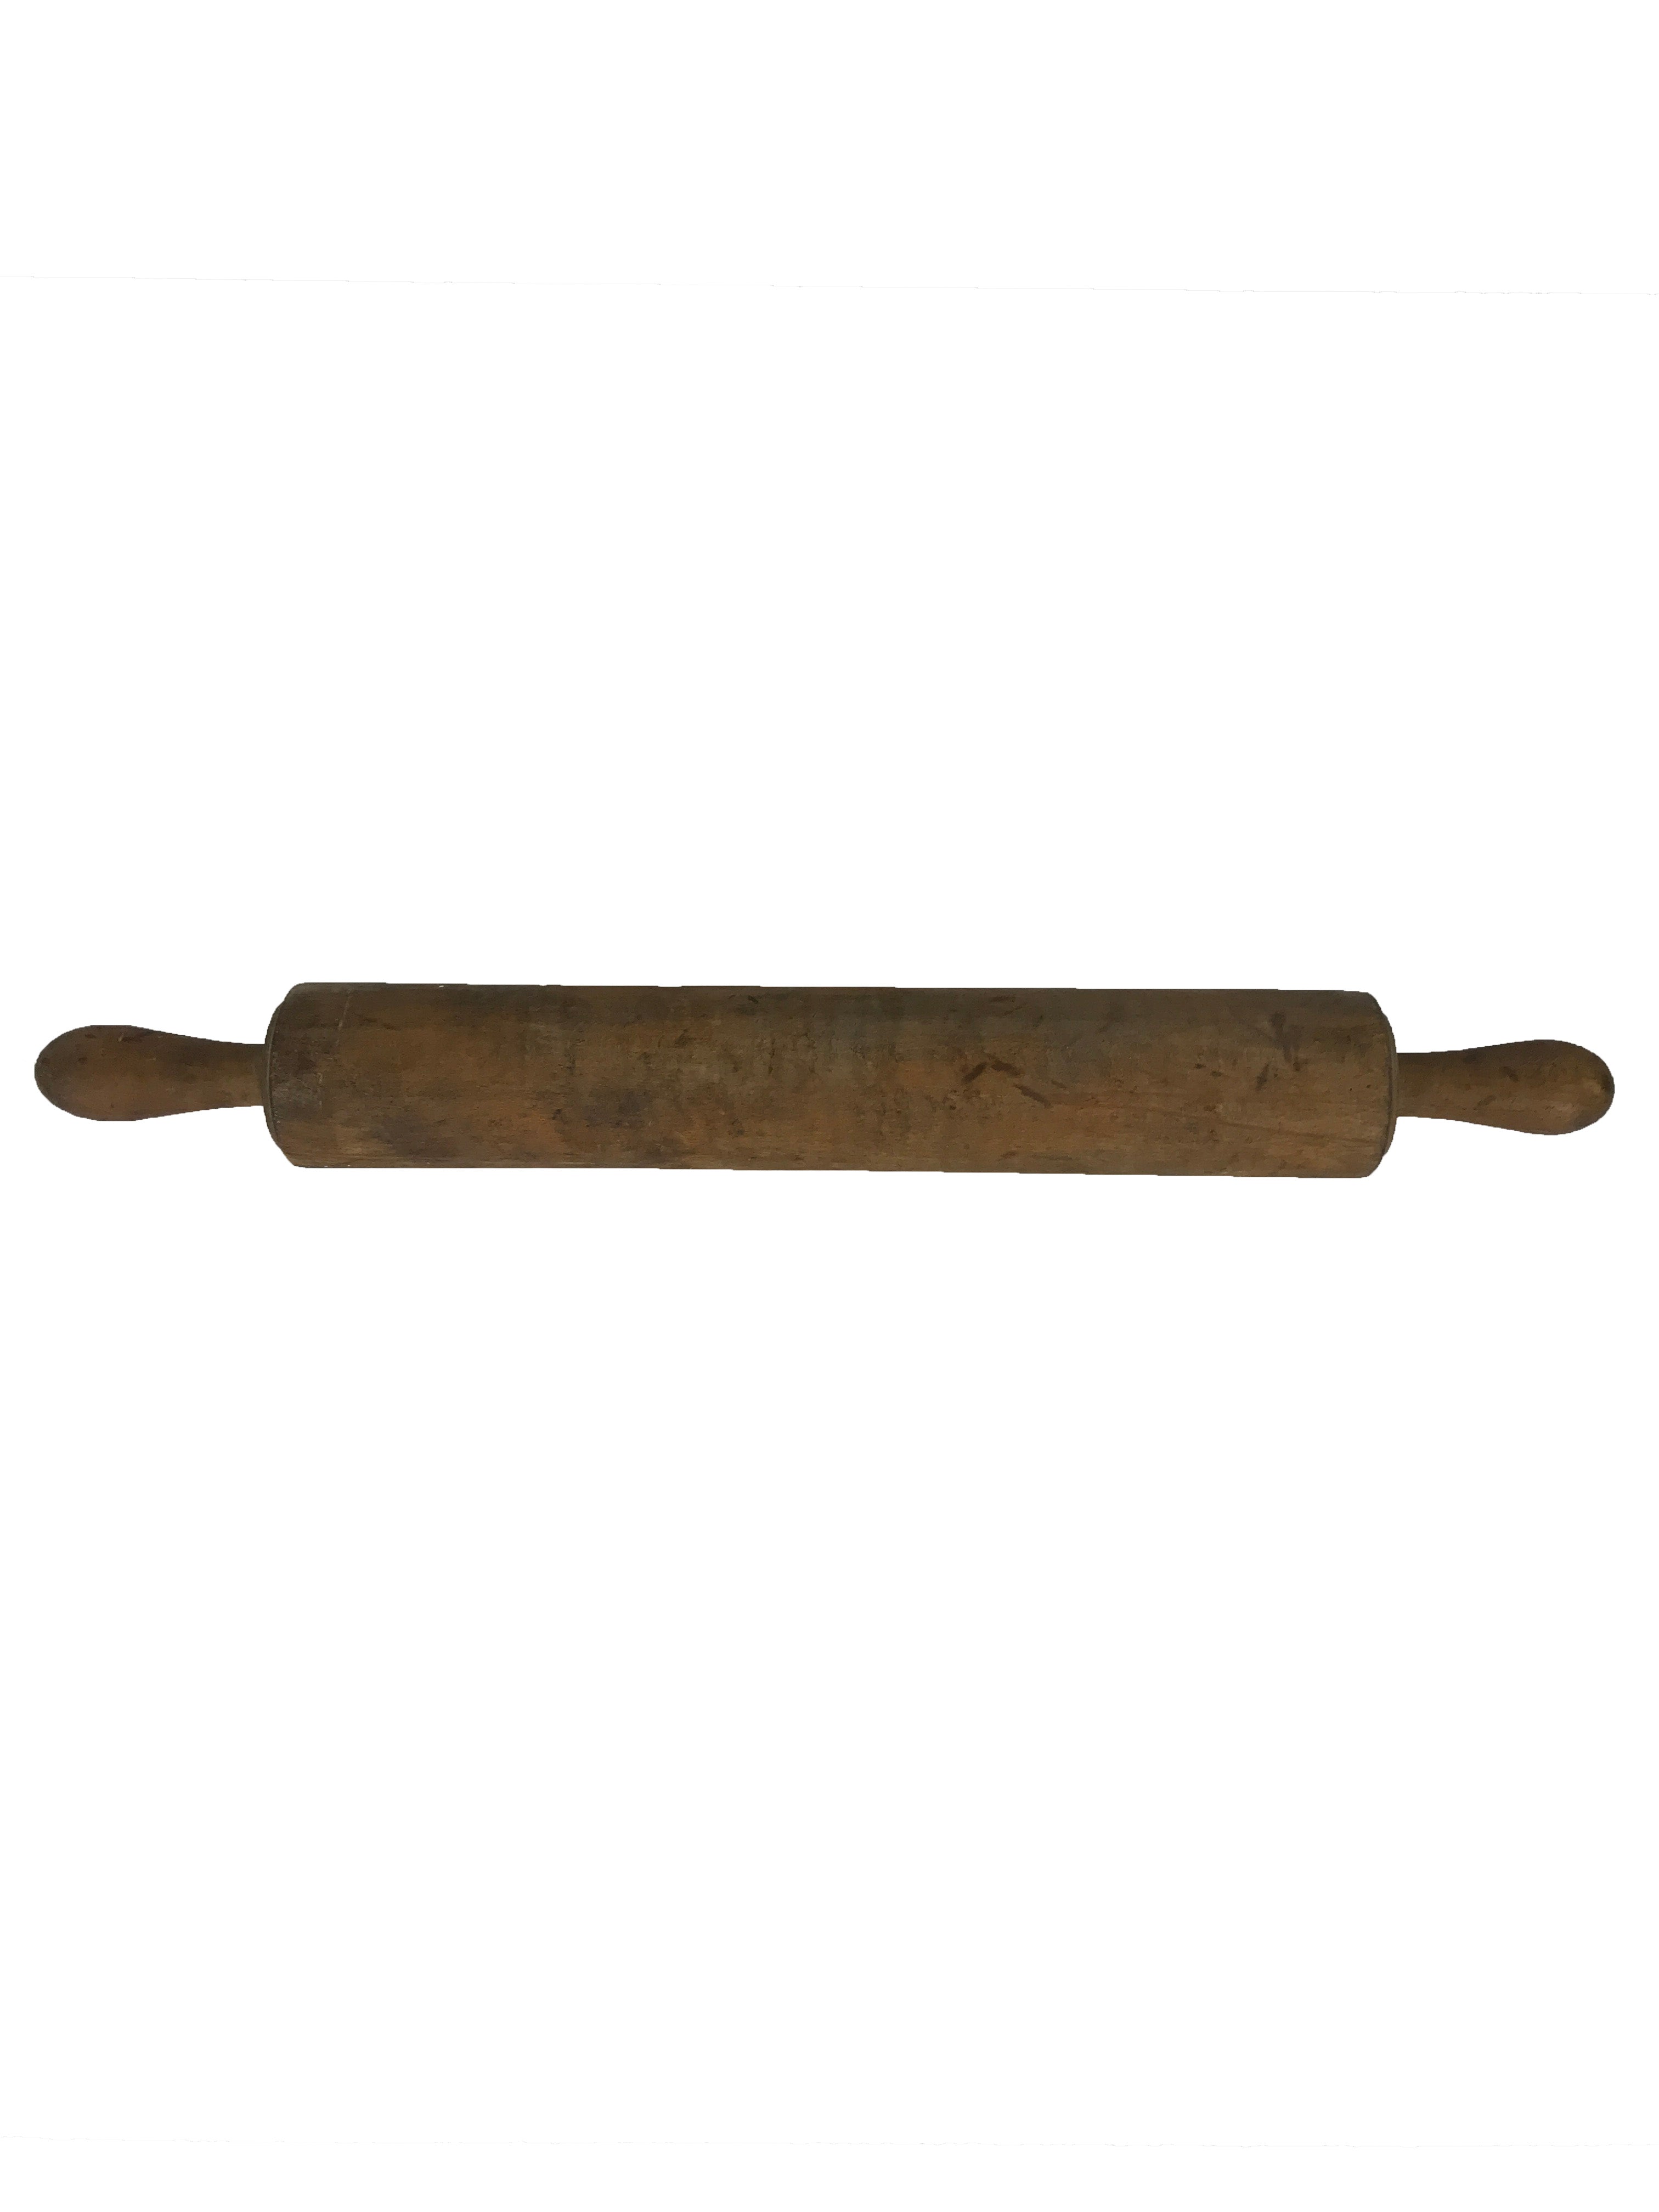 Primitive Antique Wooden Rolling Pin 19"